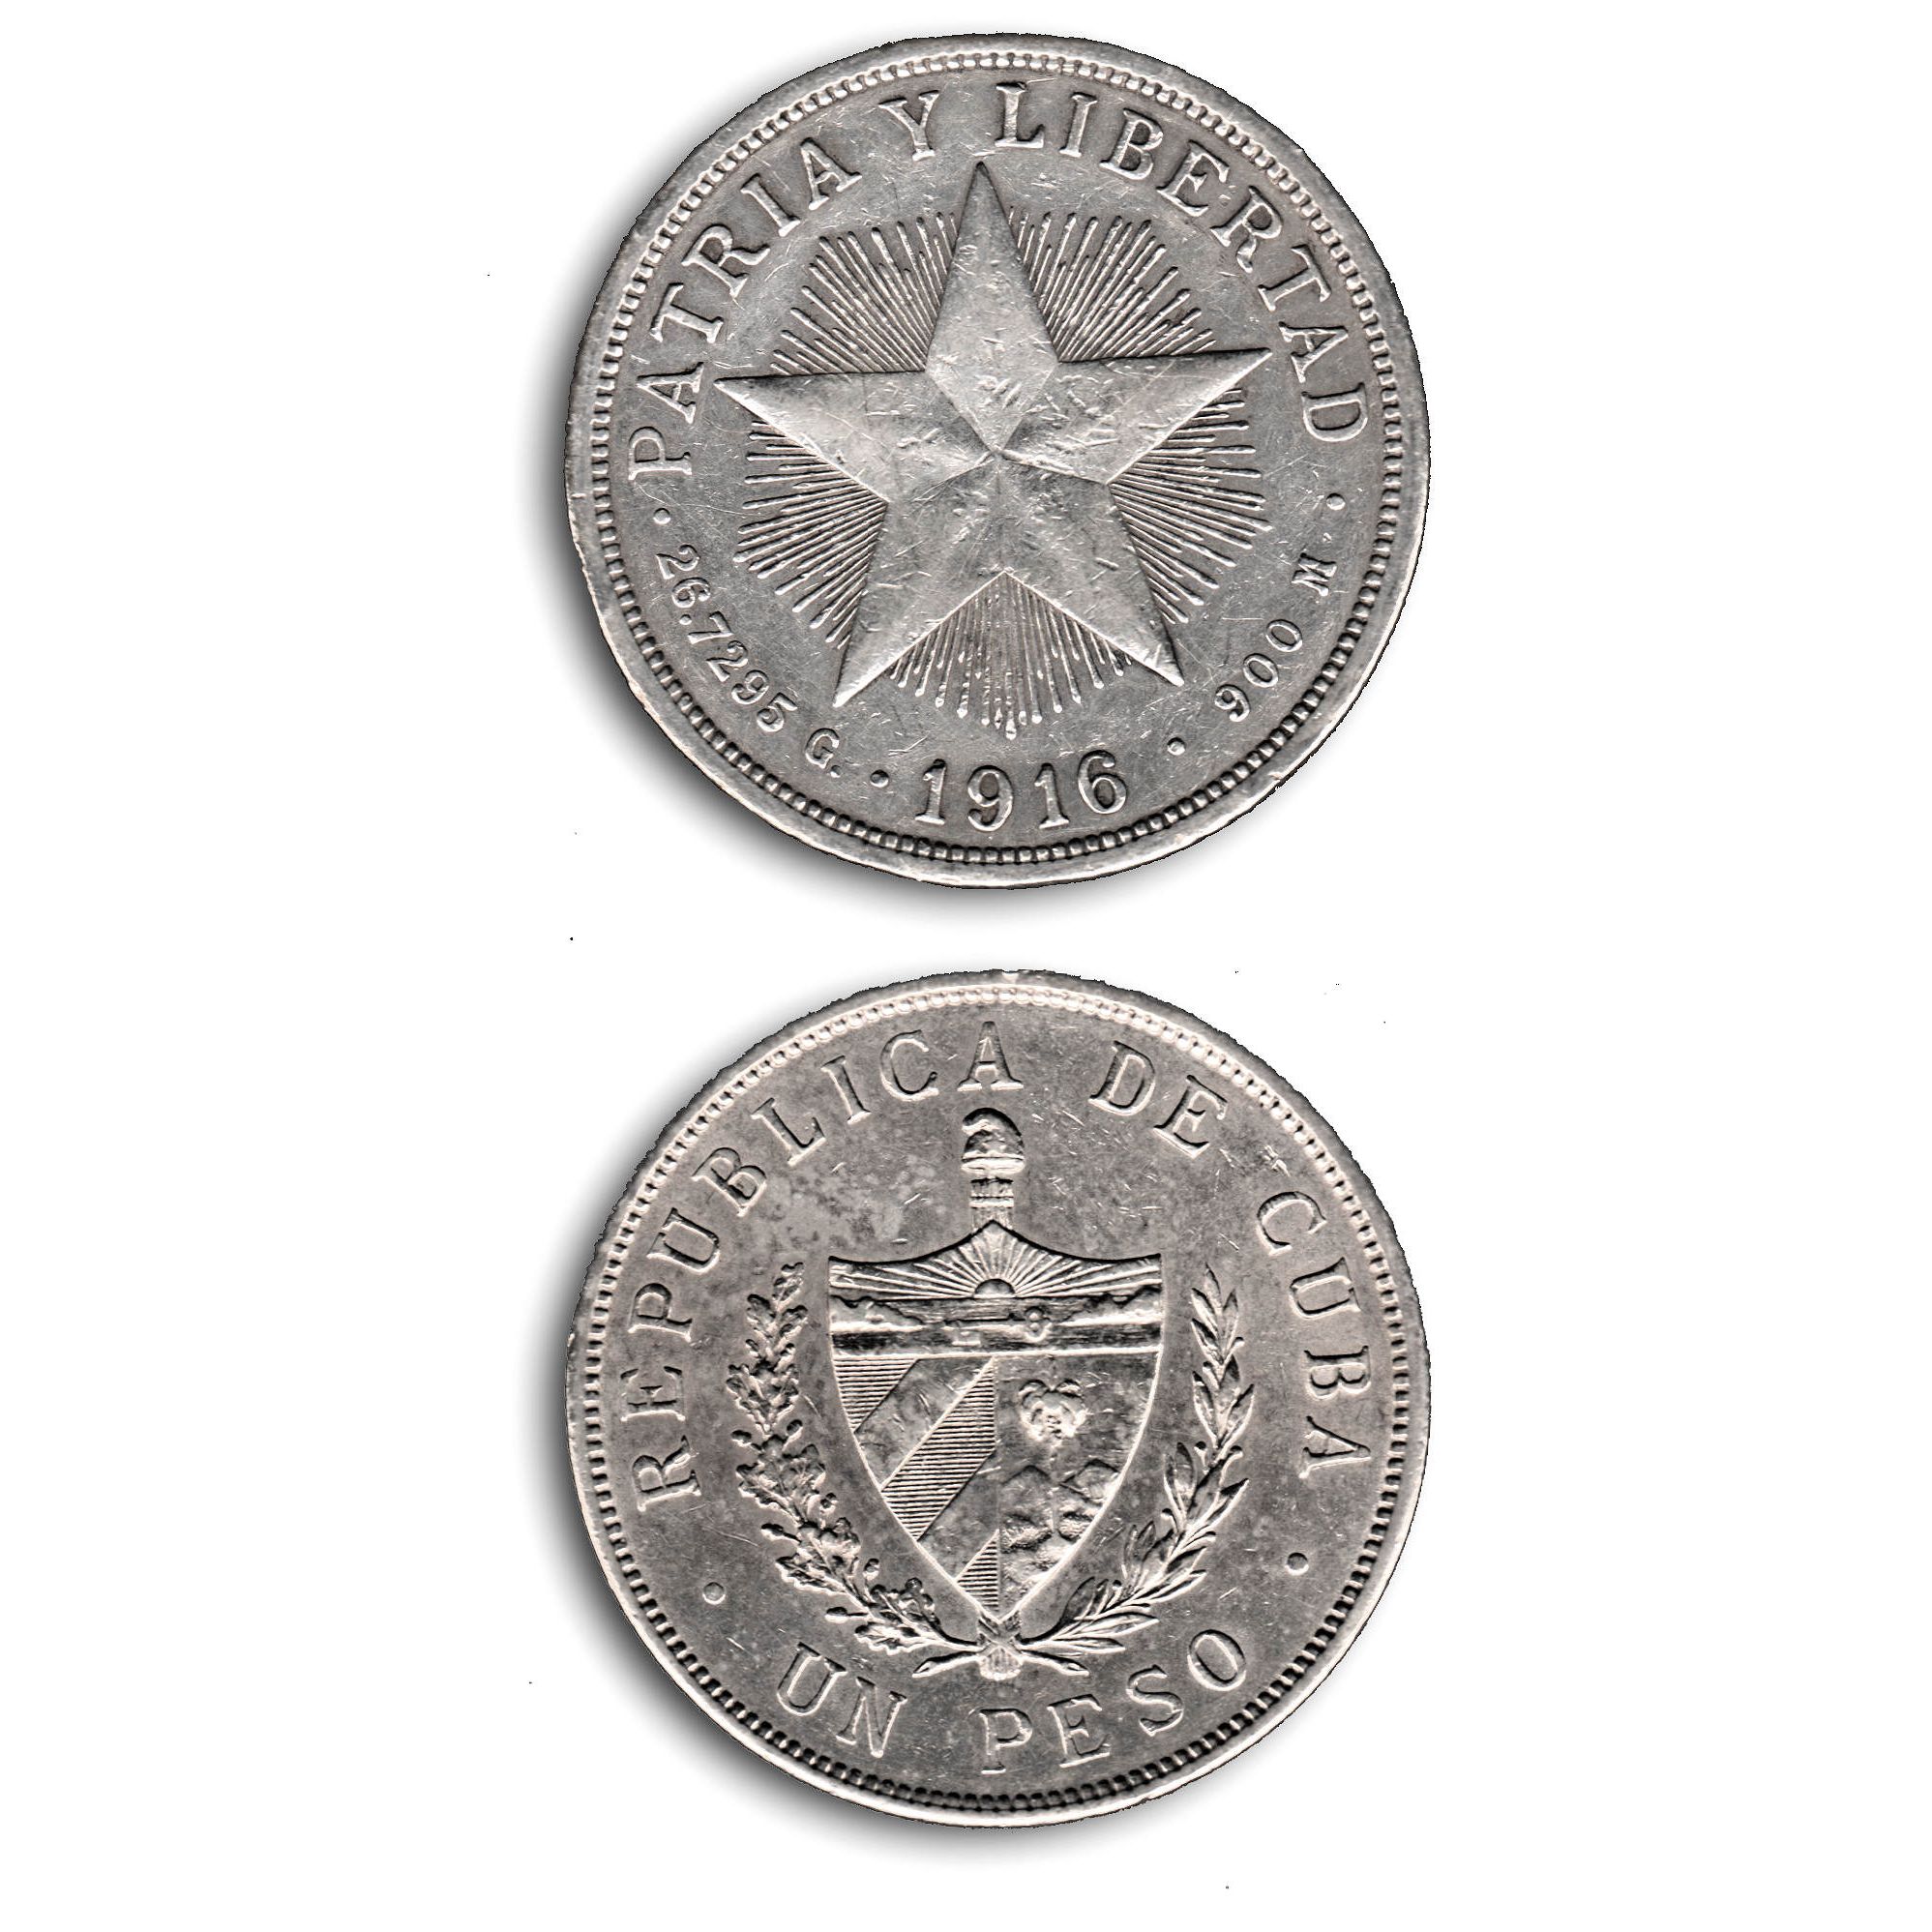 Buy & Sell vintage Cuba Coins > 1916 Cuban 1 Peso Star